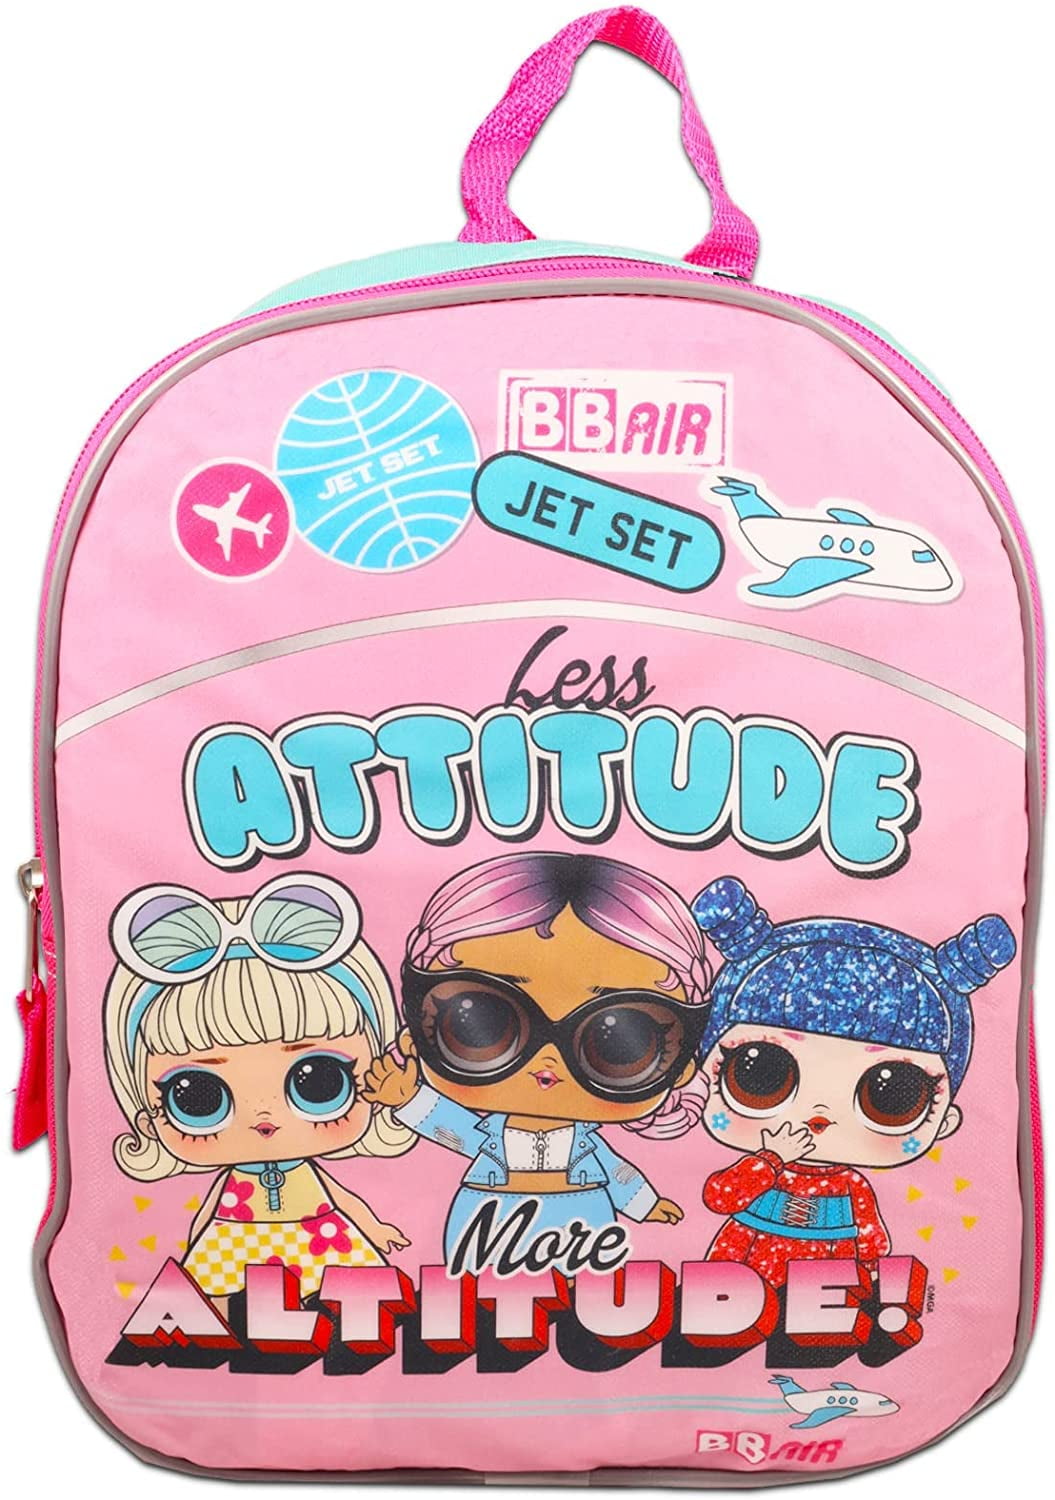 LOL Surprise Mini Backpack for Girls 11 Attitude Altitude Backpack 0ea6f11a 87d6 4033 b8d8 4df1a6c24242.c72cbd893a42f1a2d638f50f1da00326